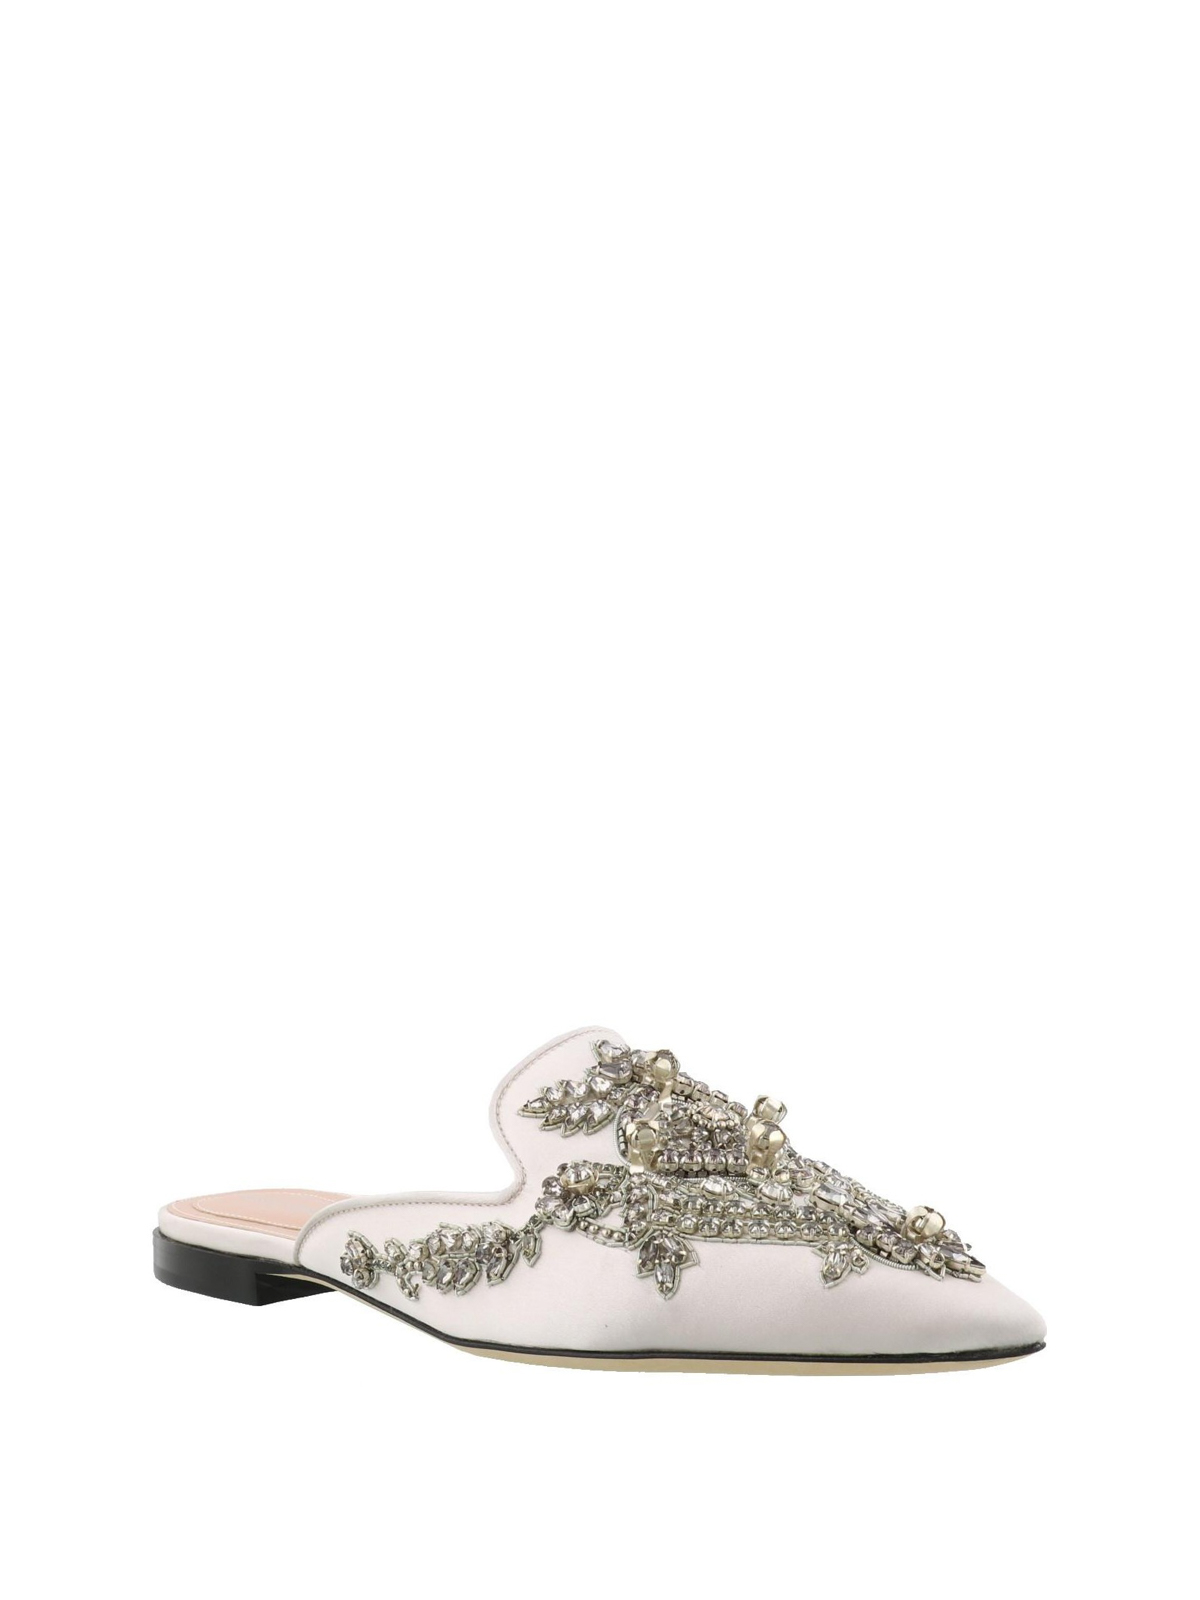 shoes Alberta - Crystal embellished white satin mules 660282010002